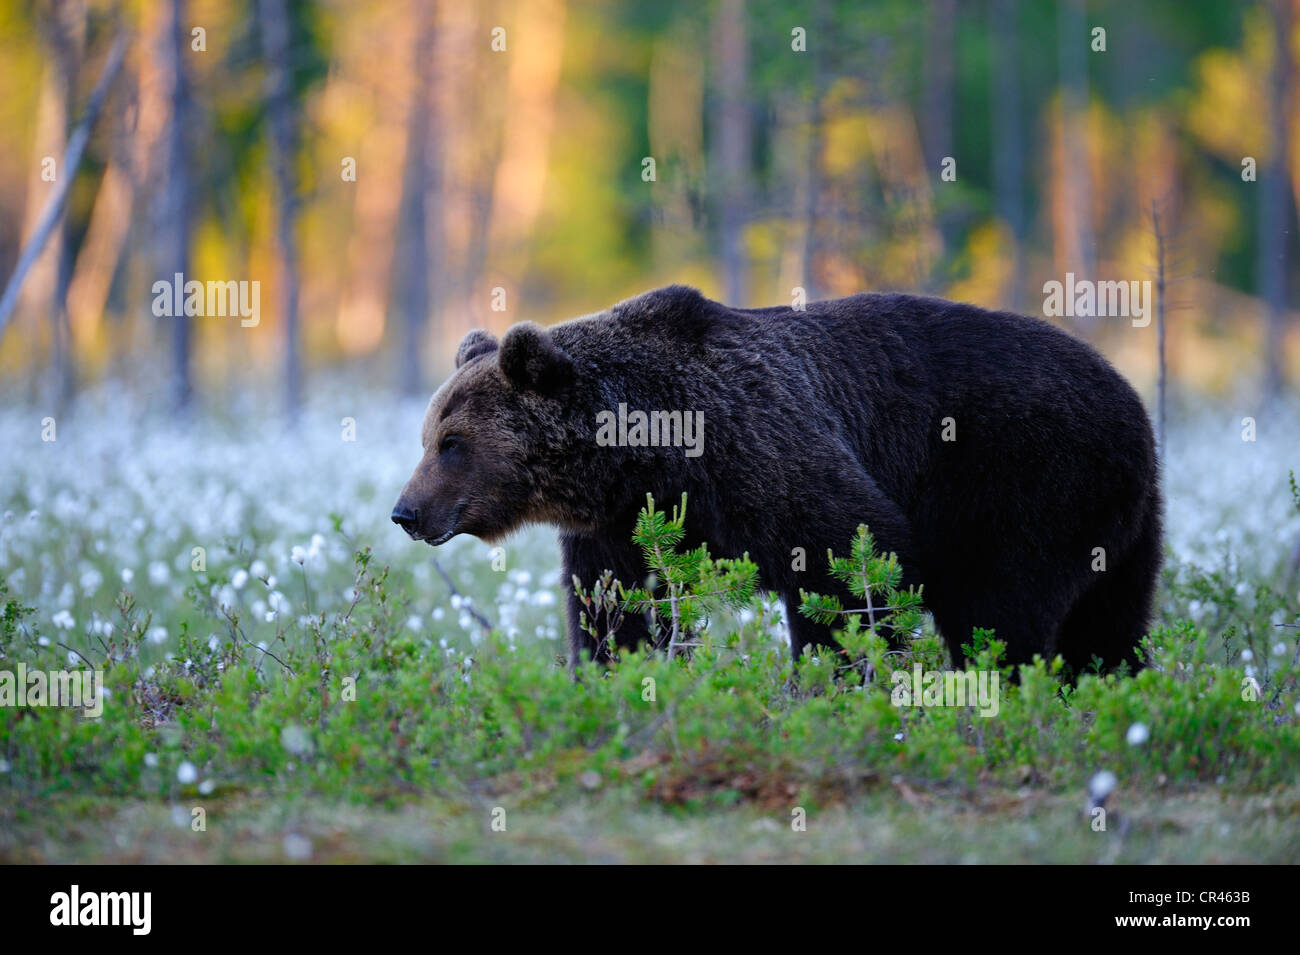 L'orso bruno (Ursus arctos) al tramonto, finlandese una palude con cotone erba, Carelia, Finlandia orientale, Finlandia e Scandinavia, Europa Foto Stock